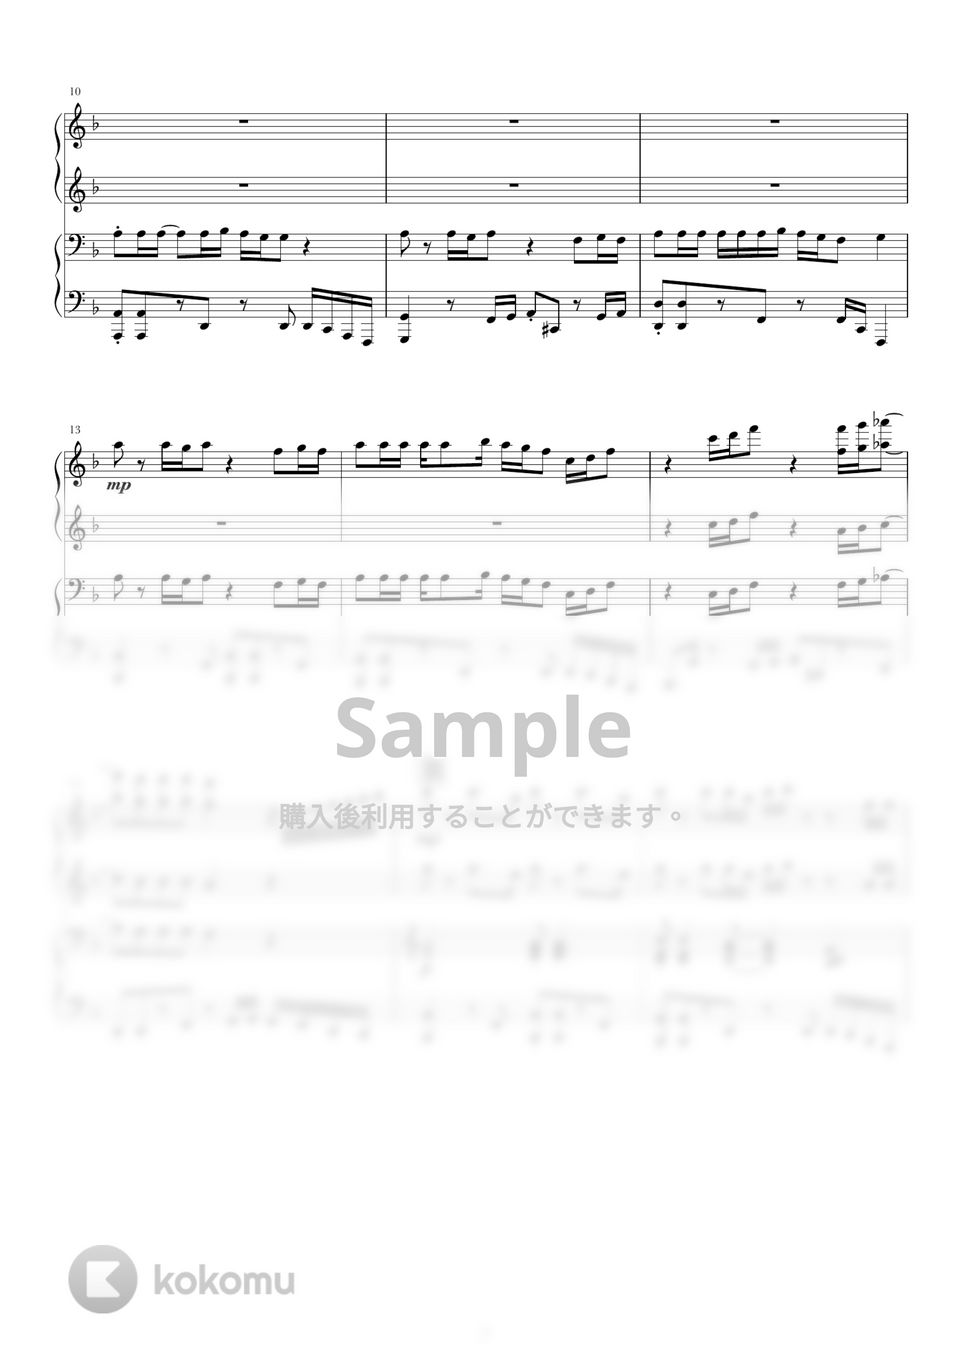 Official髭男dism - TATTOO (ピアノ連弾) by norimaki